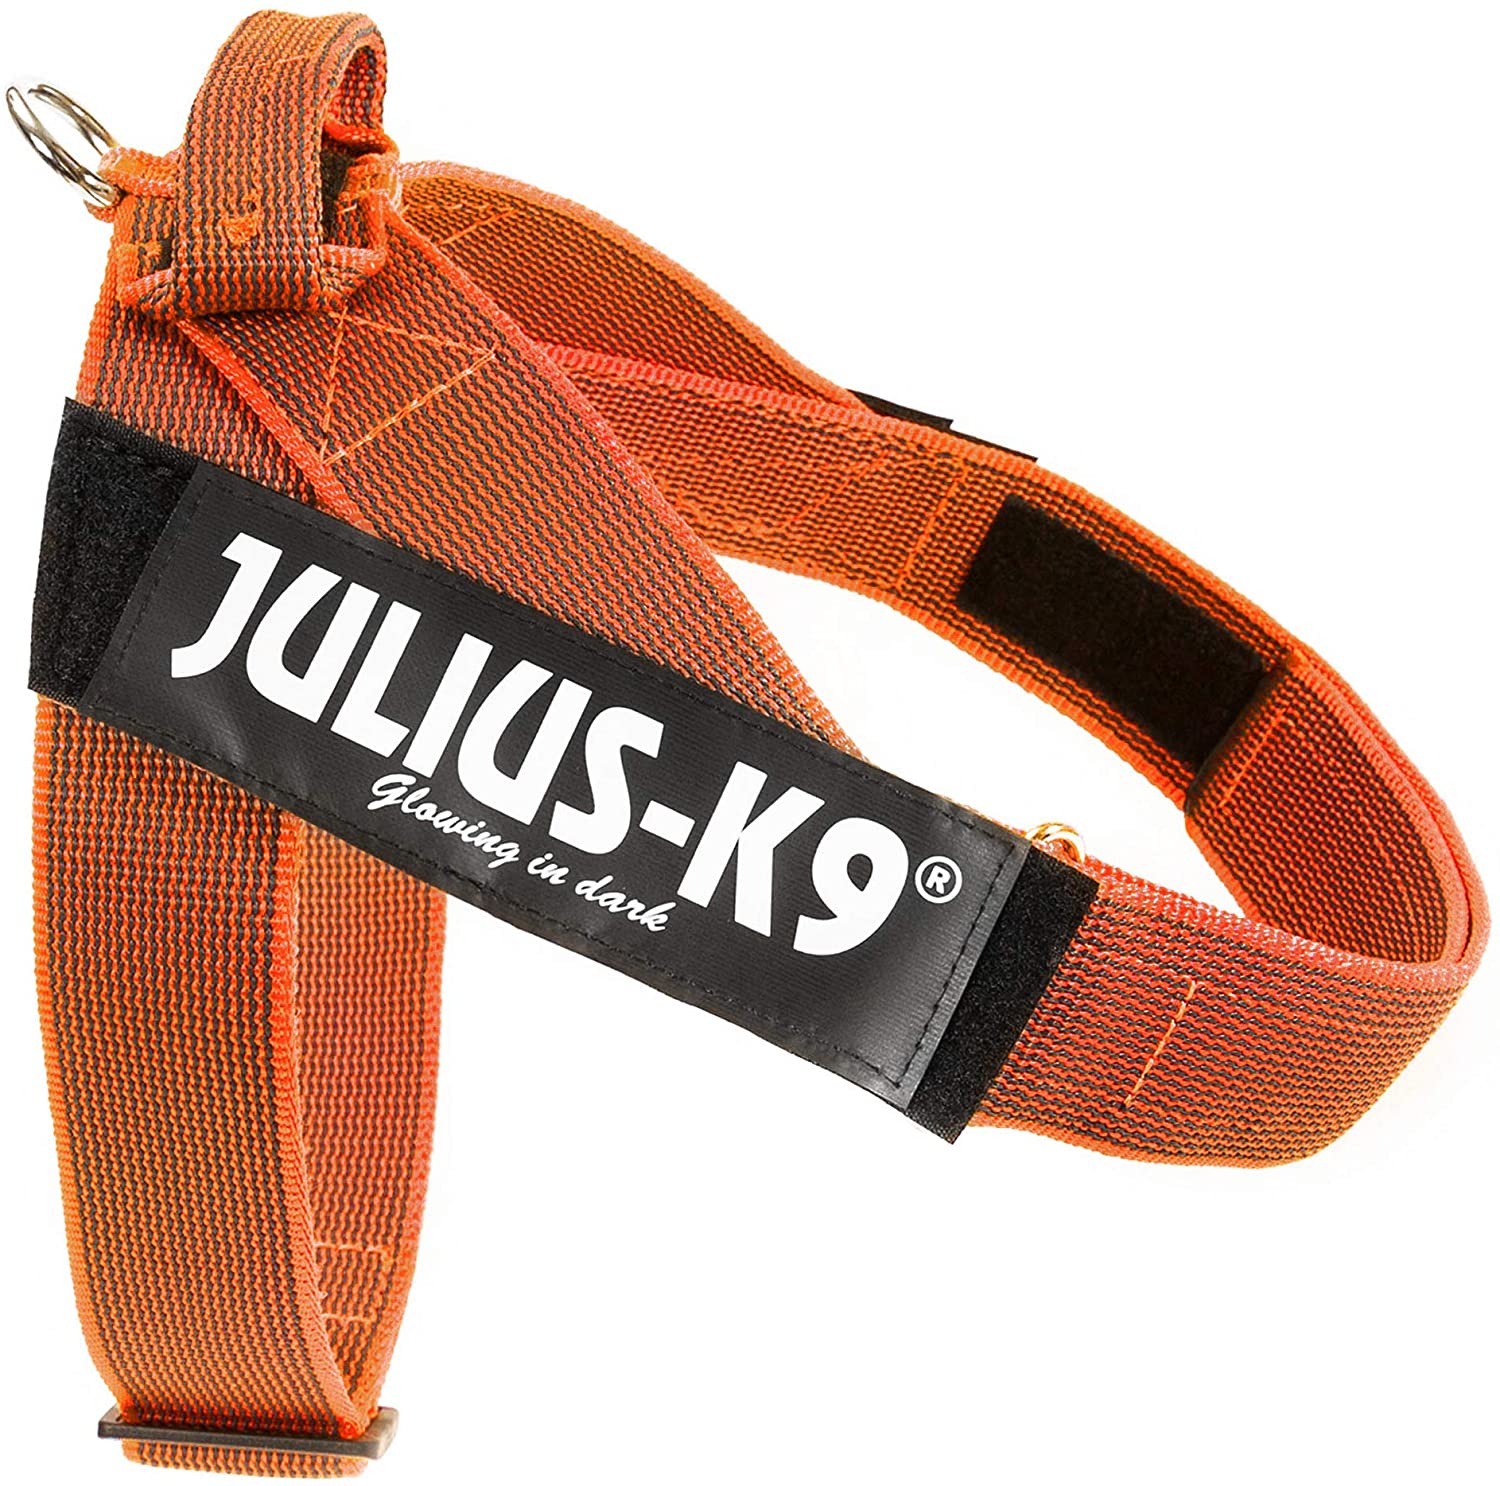  Julius-K9 Color & Gray Arnés De Correa De IDC, Tamaño: 2, Color: Naranja-Gris 